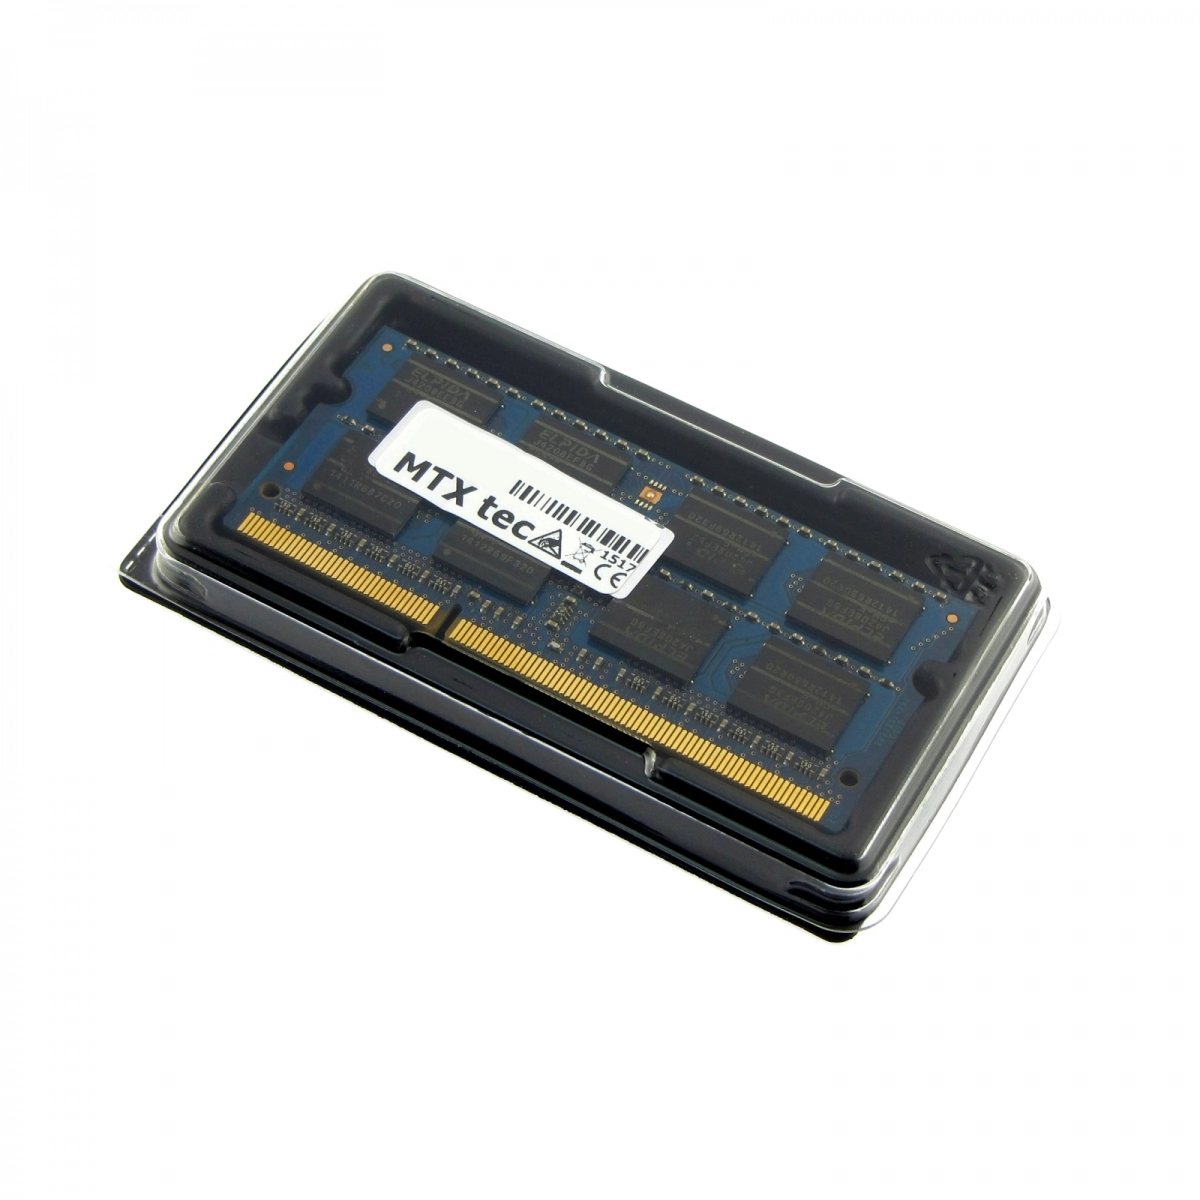 MTXtec Arbeitsspeicher 4 GB RAM für LENOVO ThinkPad T500 (2082)